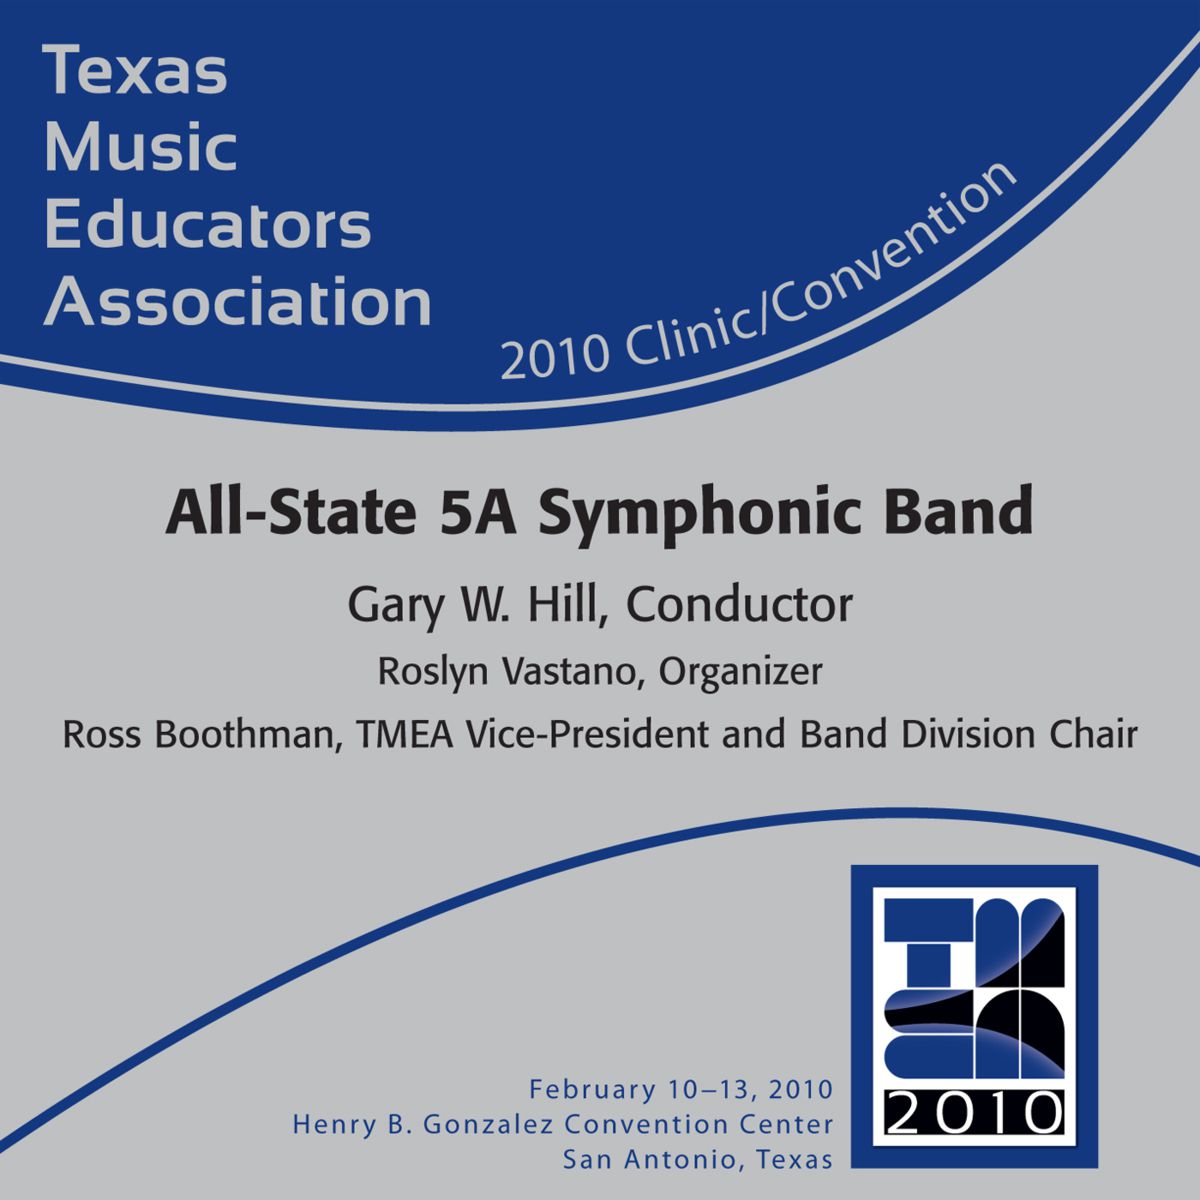 2010 Texas Music Educators Association: All-State 5A Smphonic Band - hacer clic aqu